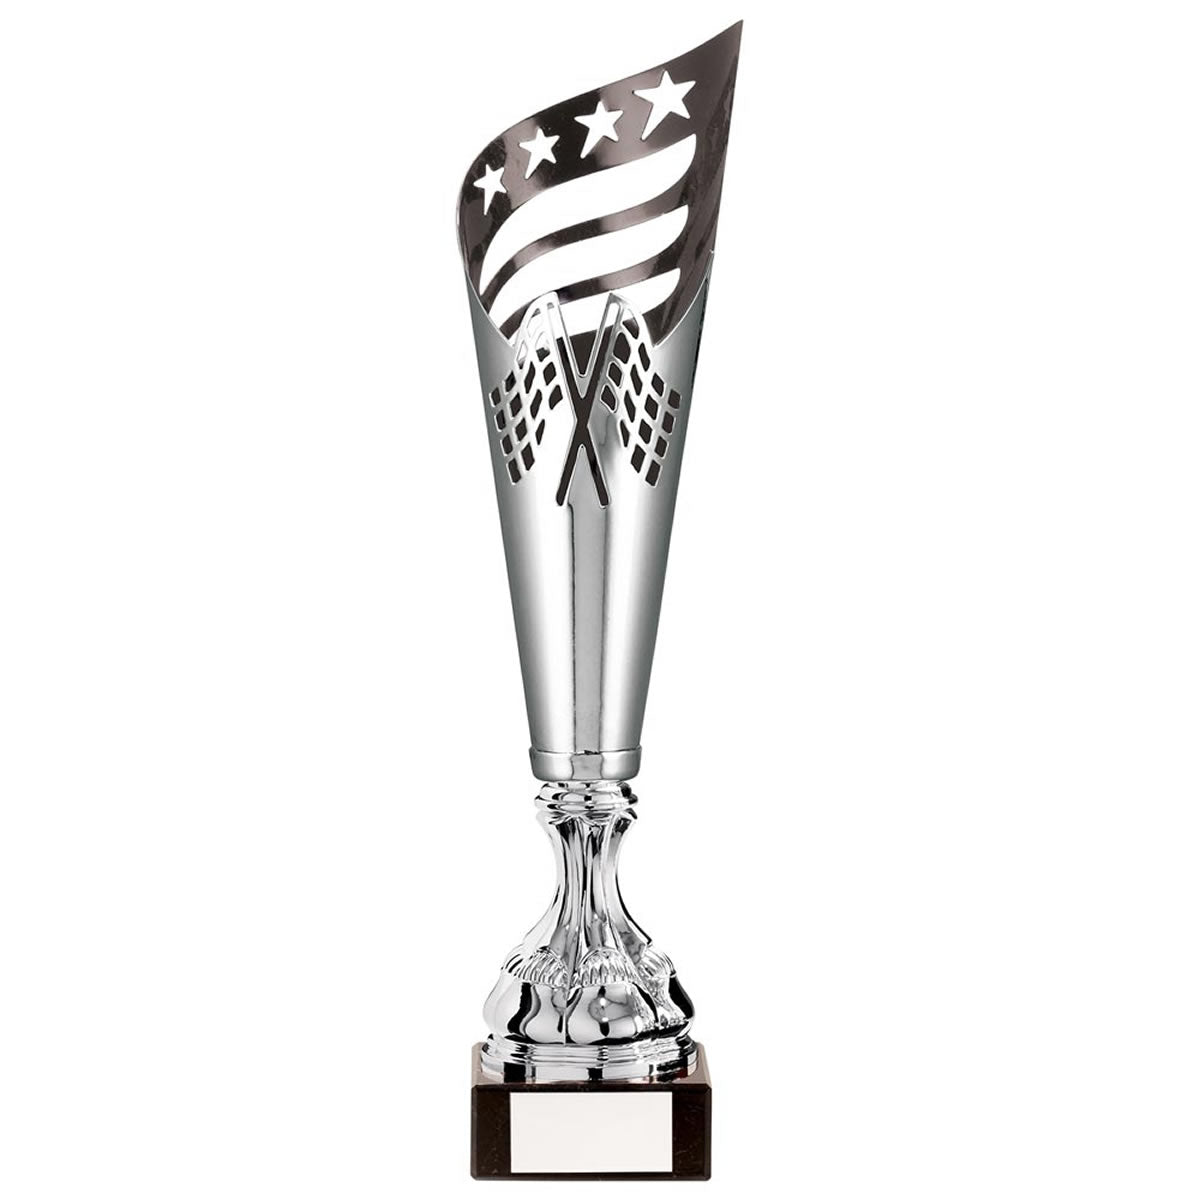 Monza Laser Cut Metal Cup Silver